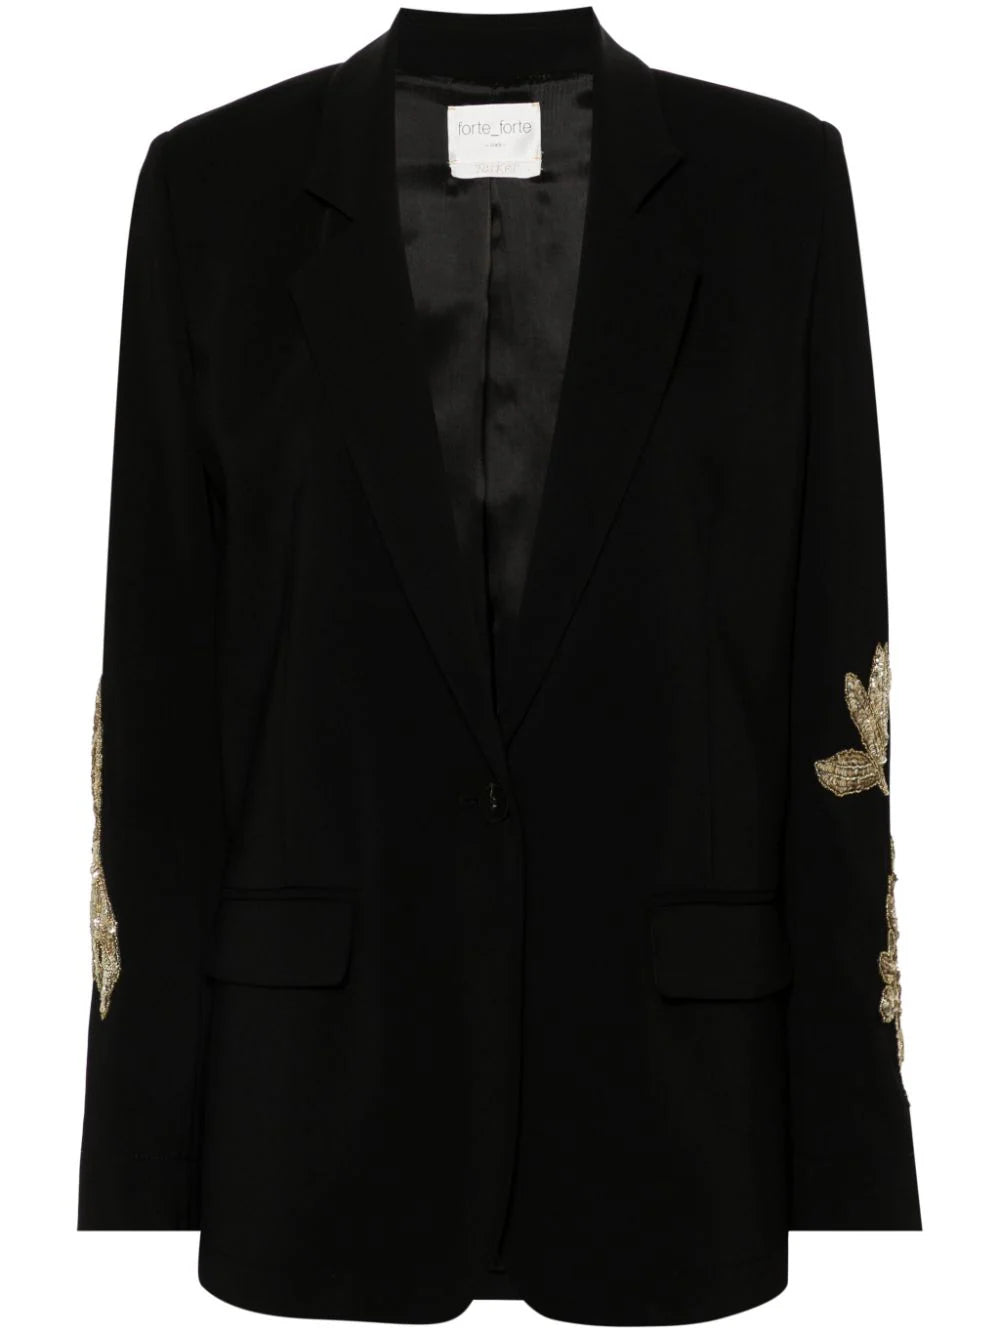 Embroidery stretch crepe cady jacket, black